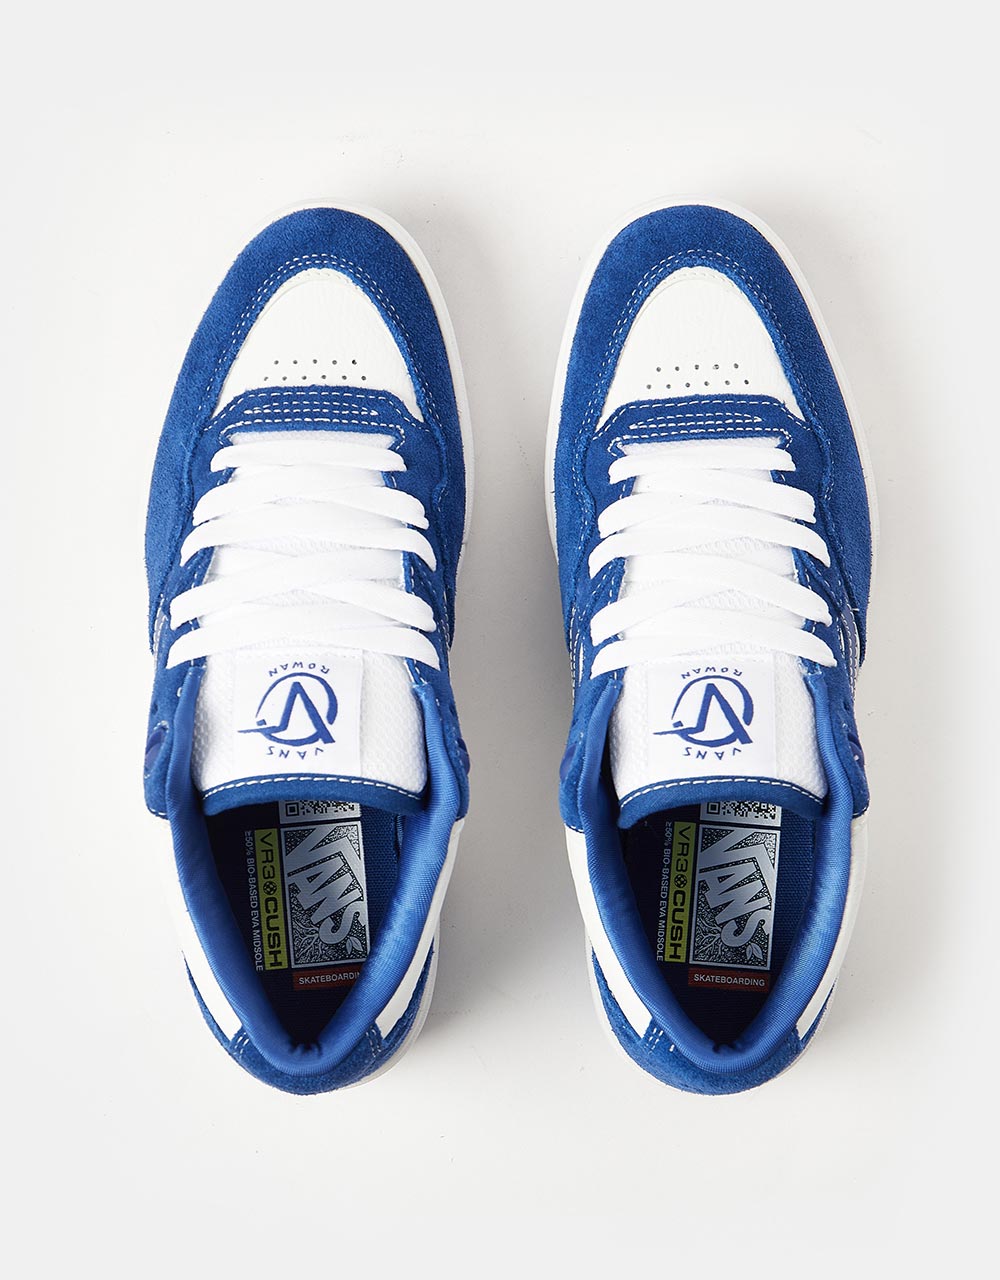 Vans Rowan II Skate Shoes -  True Blue/White